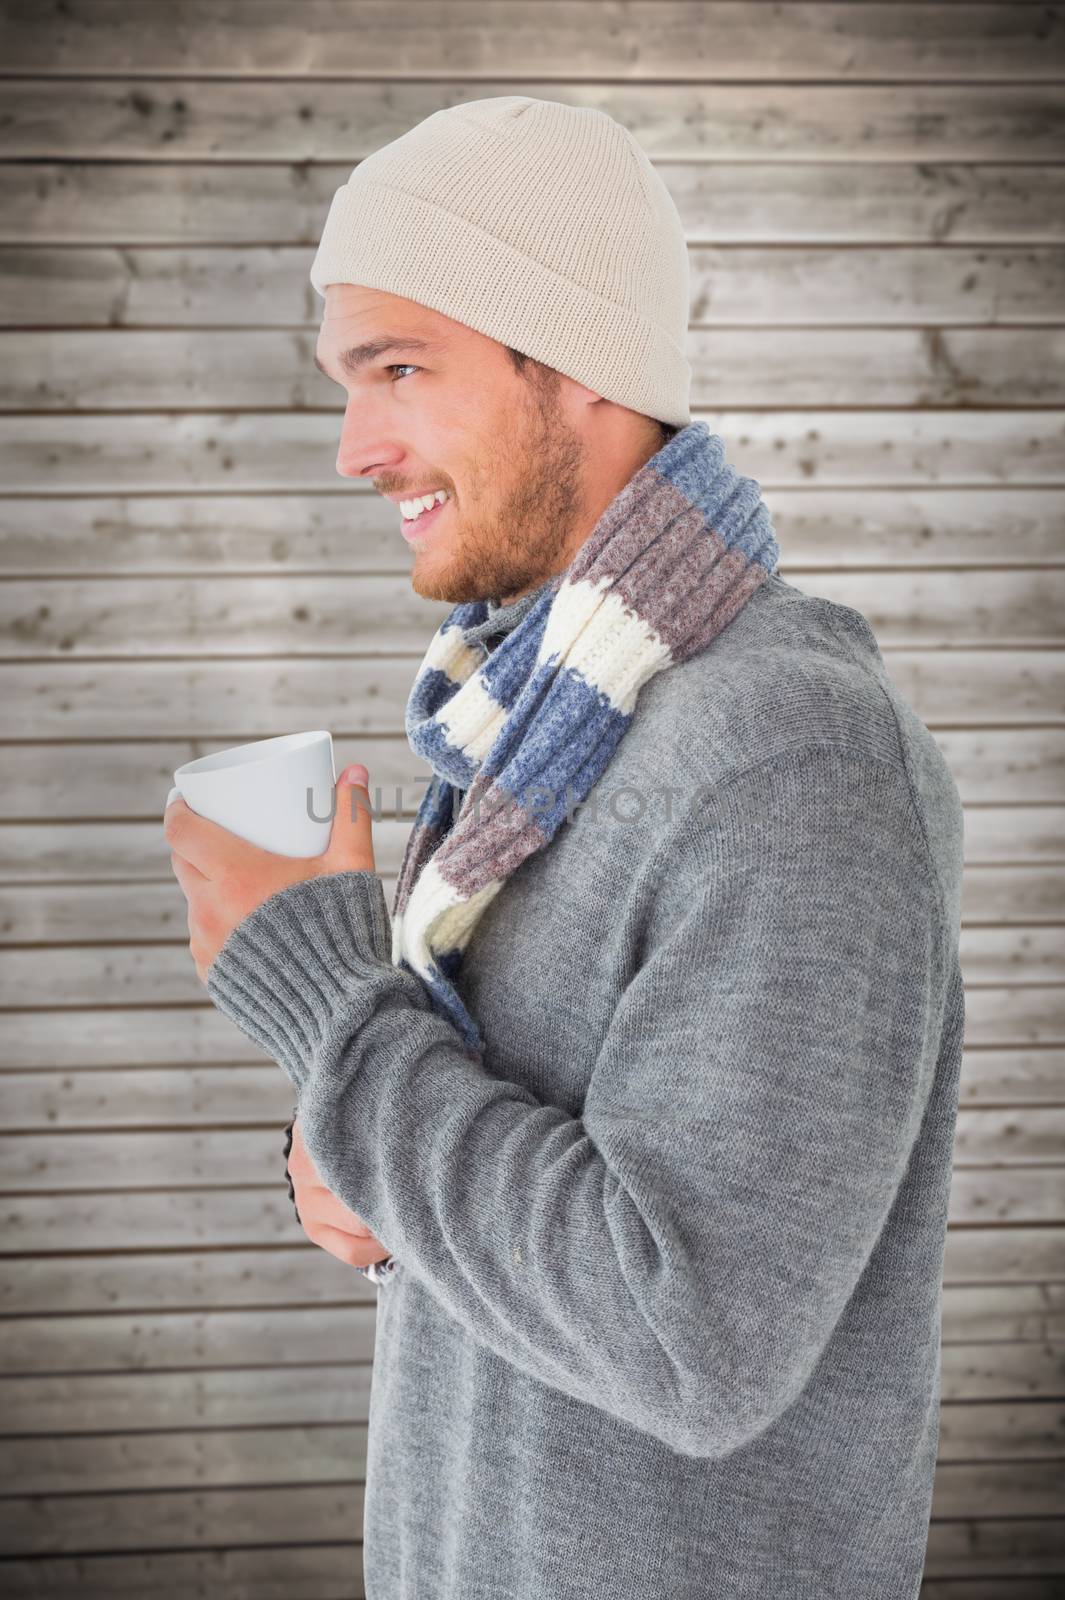 Handsome man in winter fashion holding mug against wooden planks background